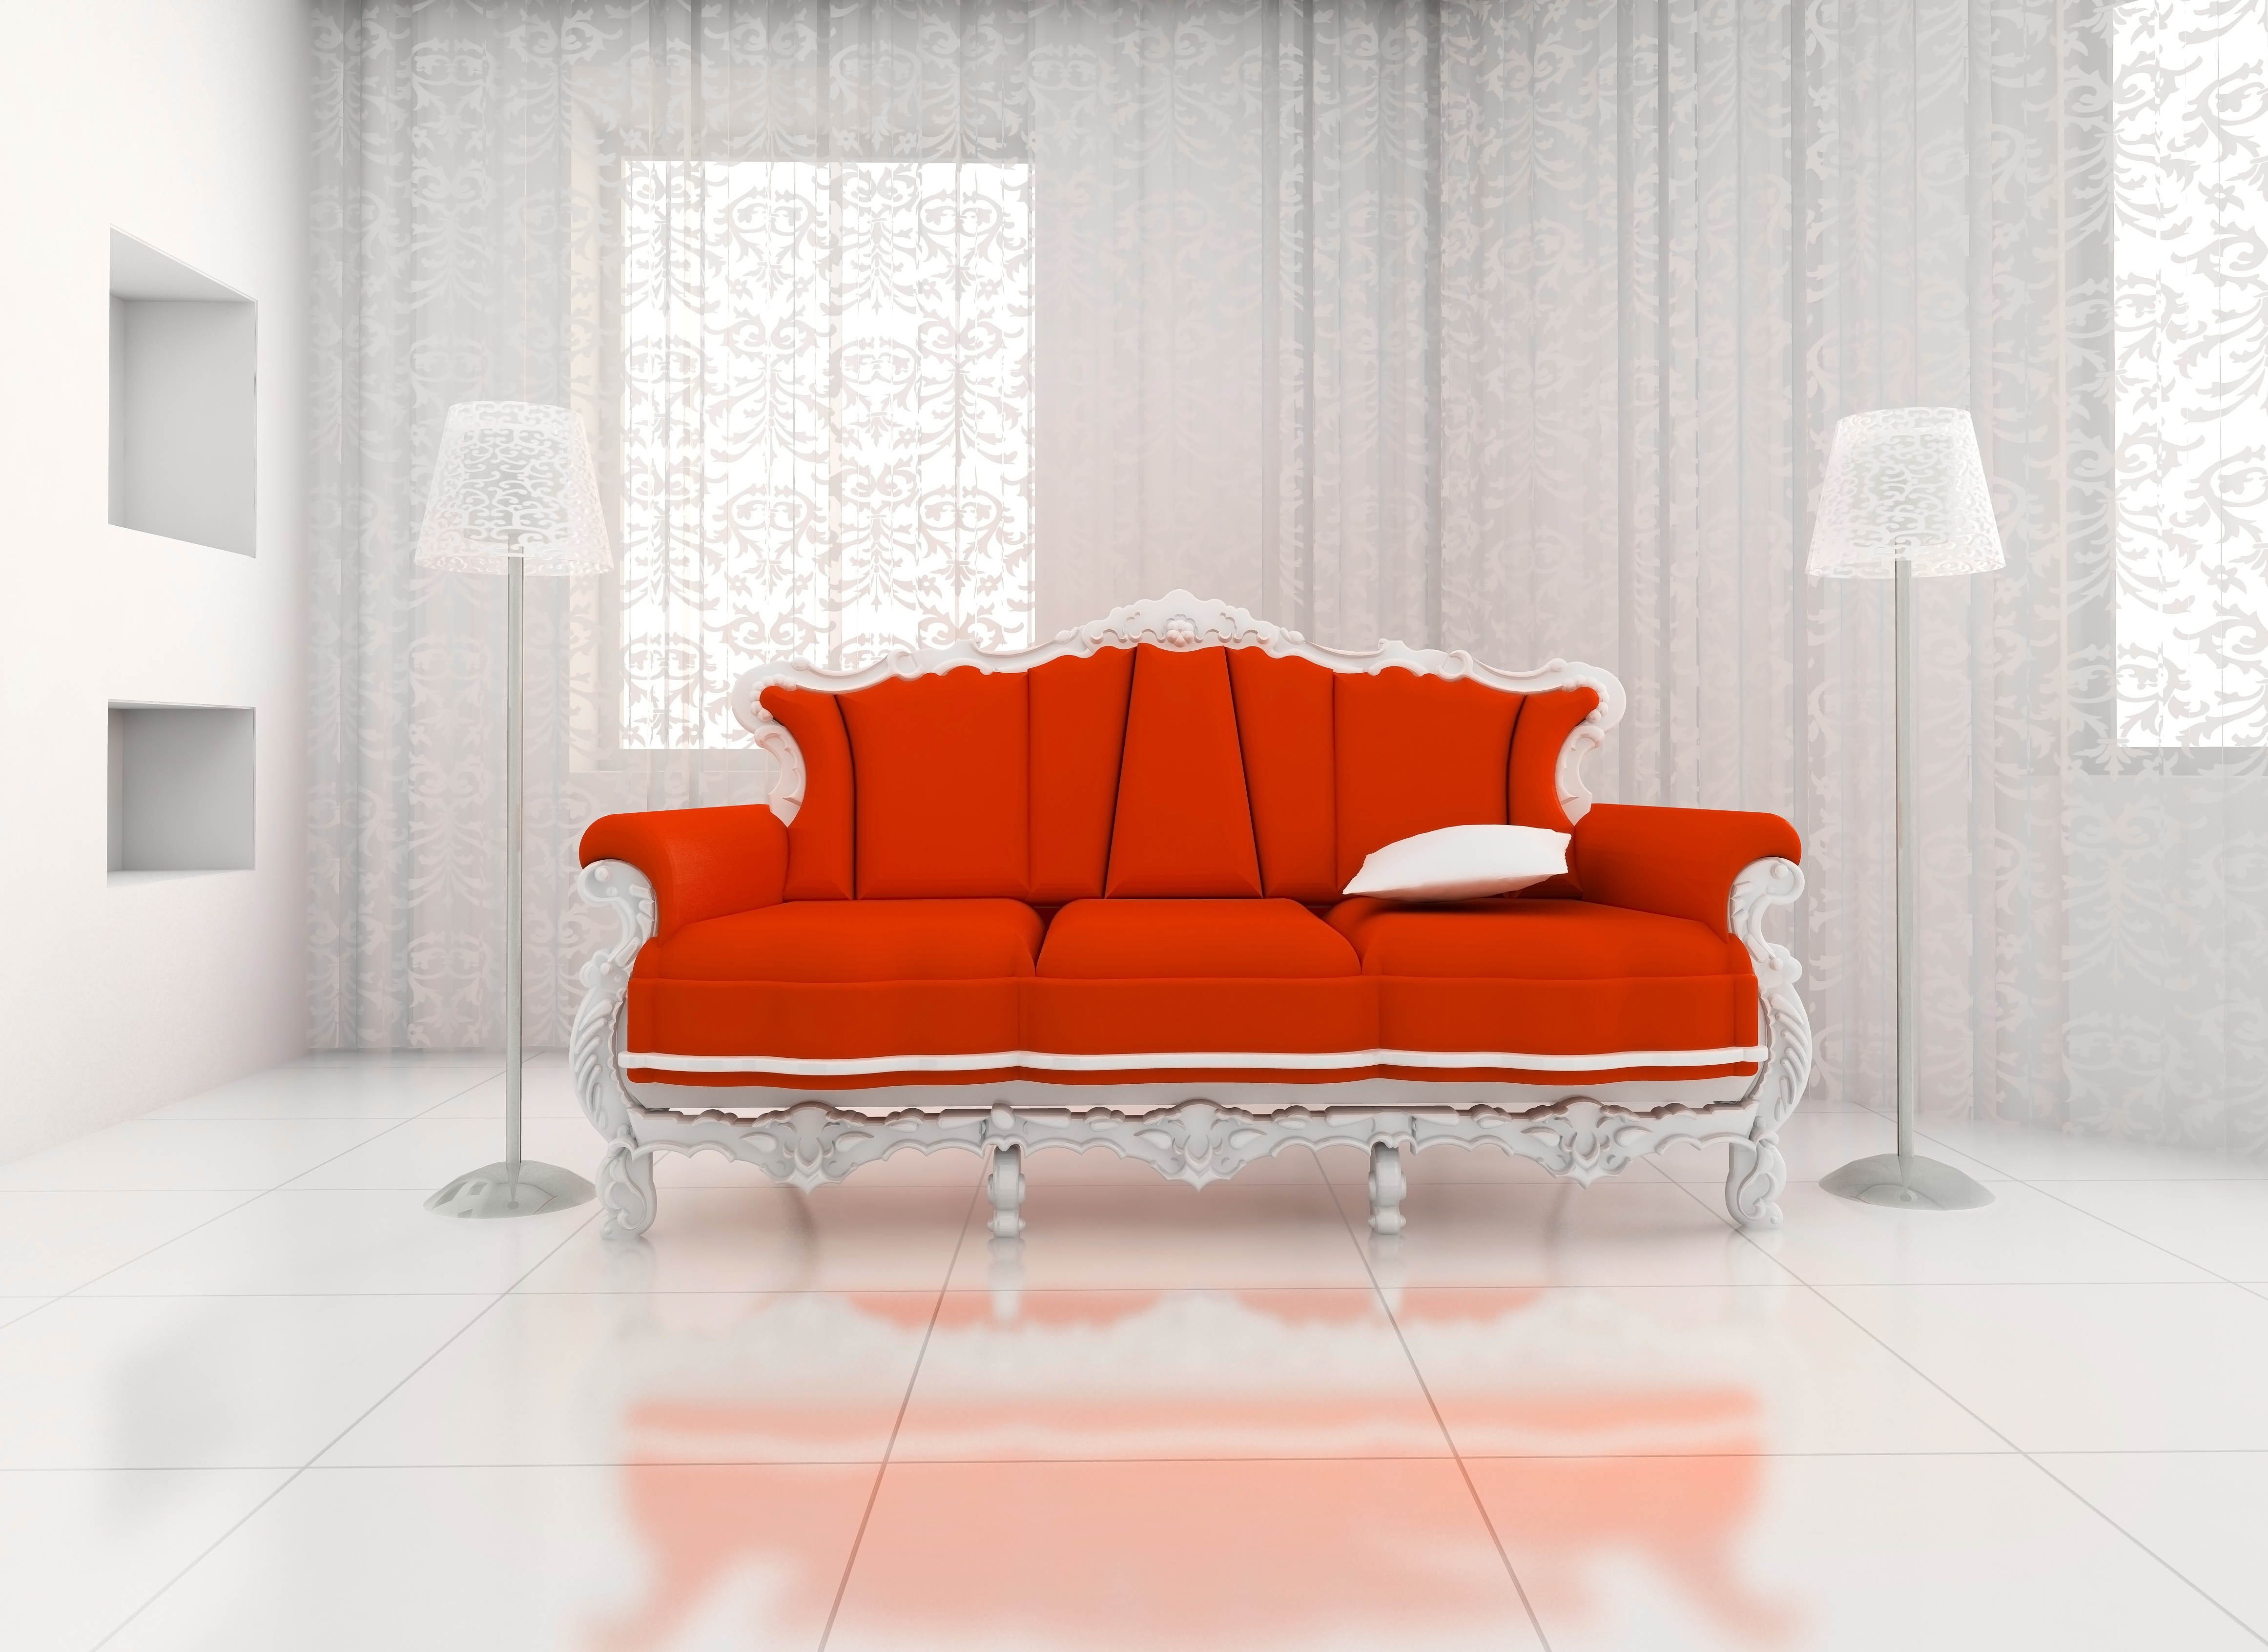 Popular Sofa Image for Phone